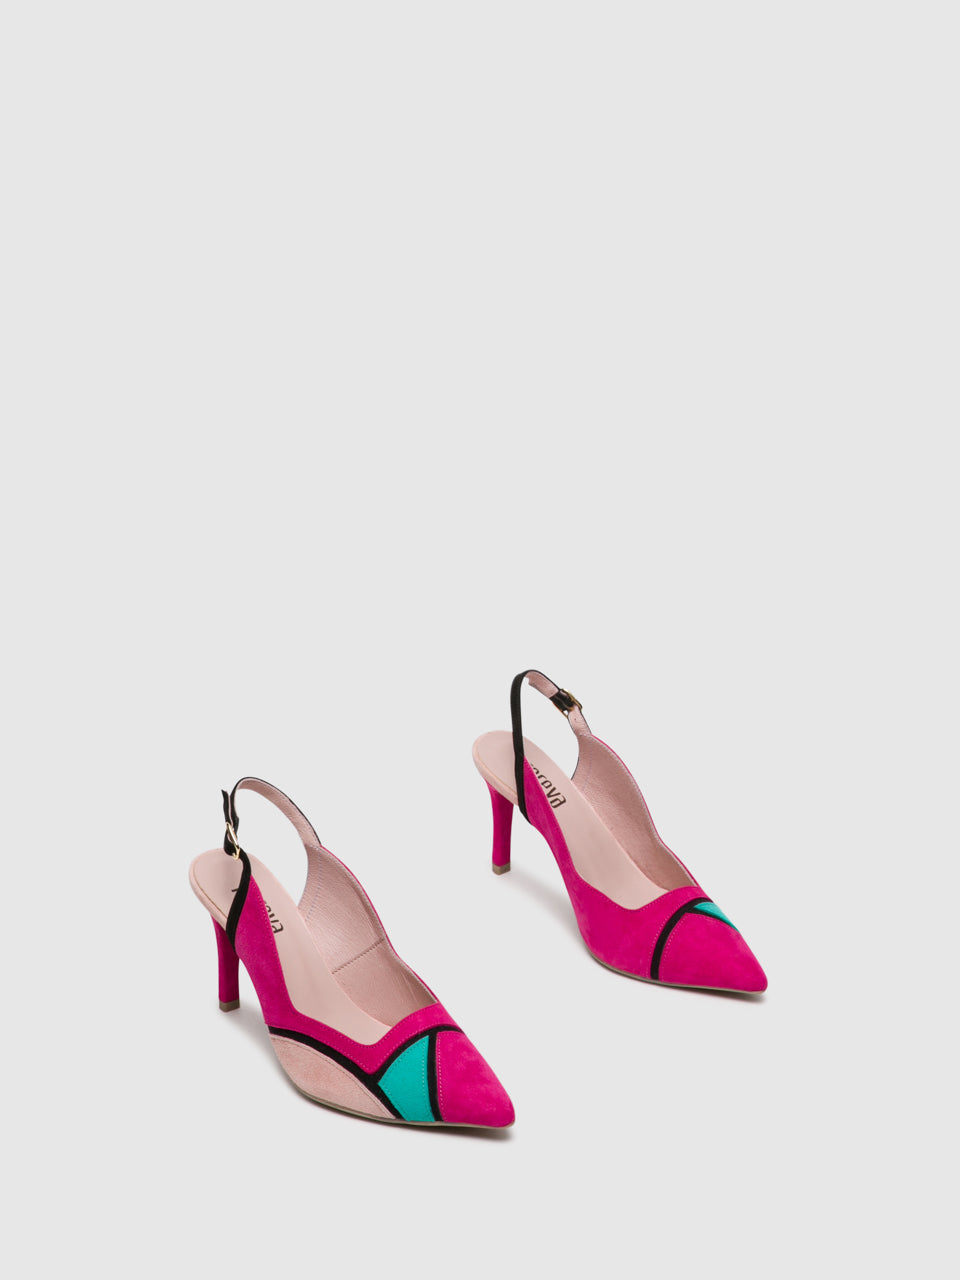 Foreva Tan Pink Stiletto Shoes